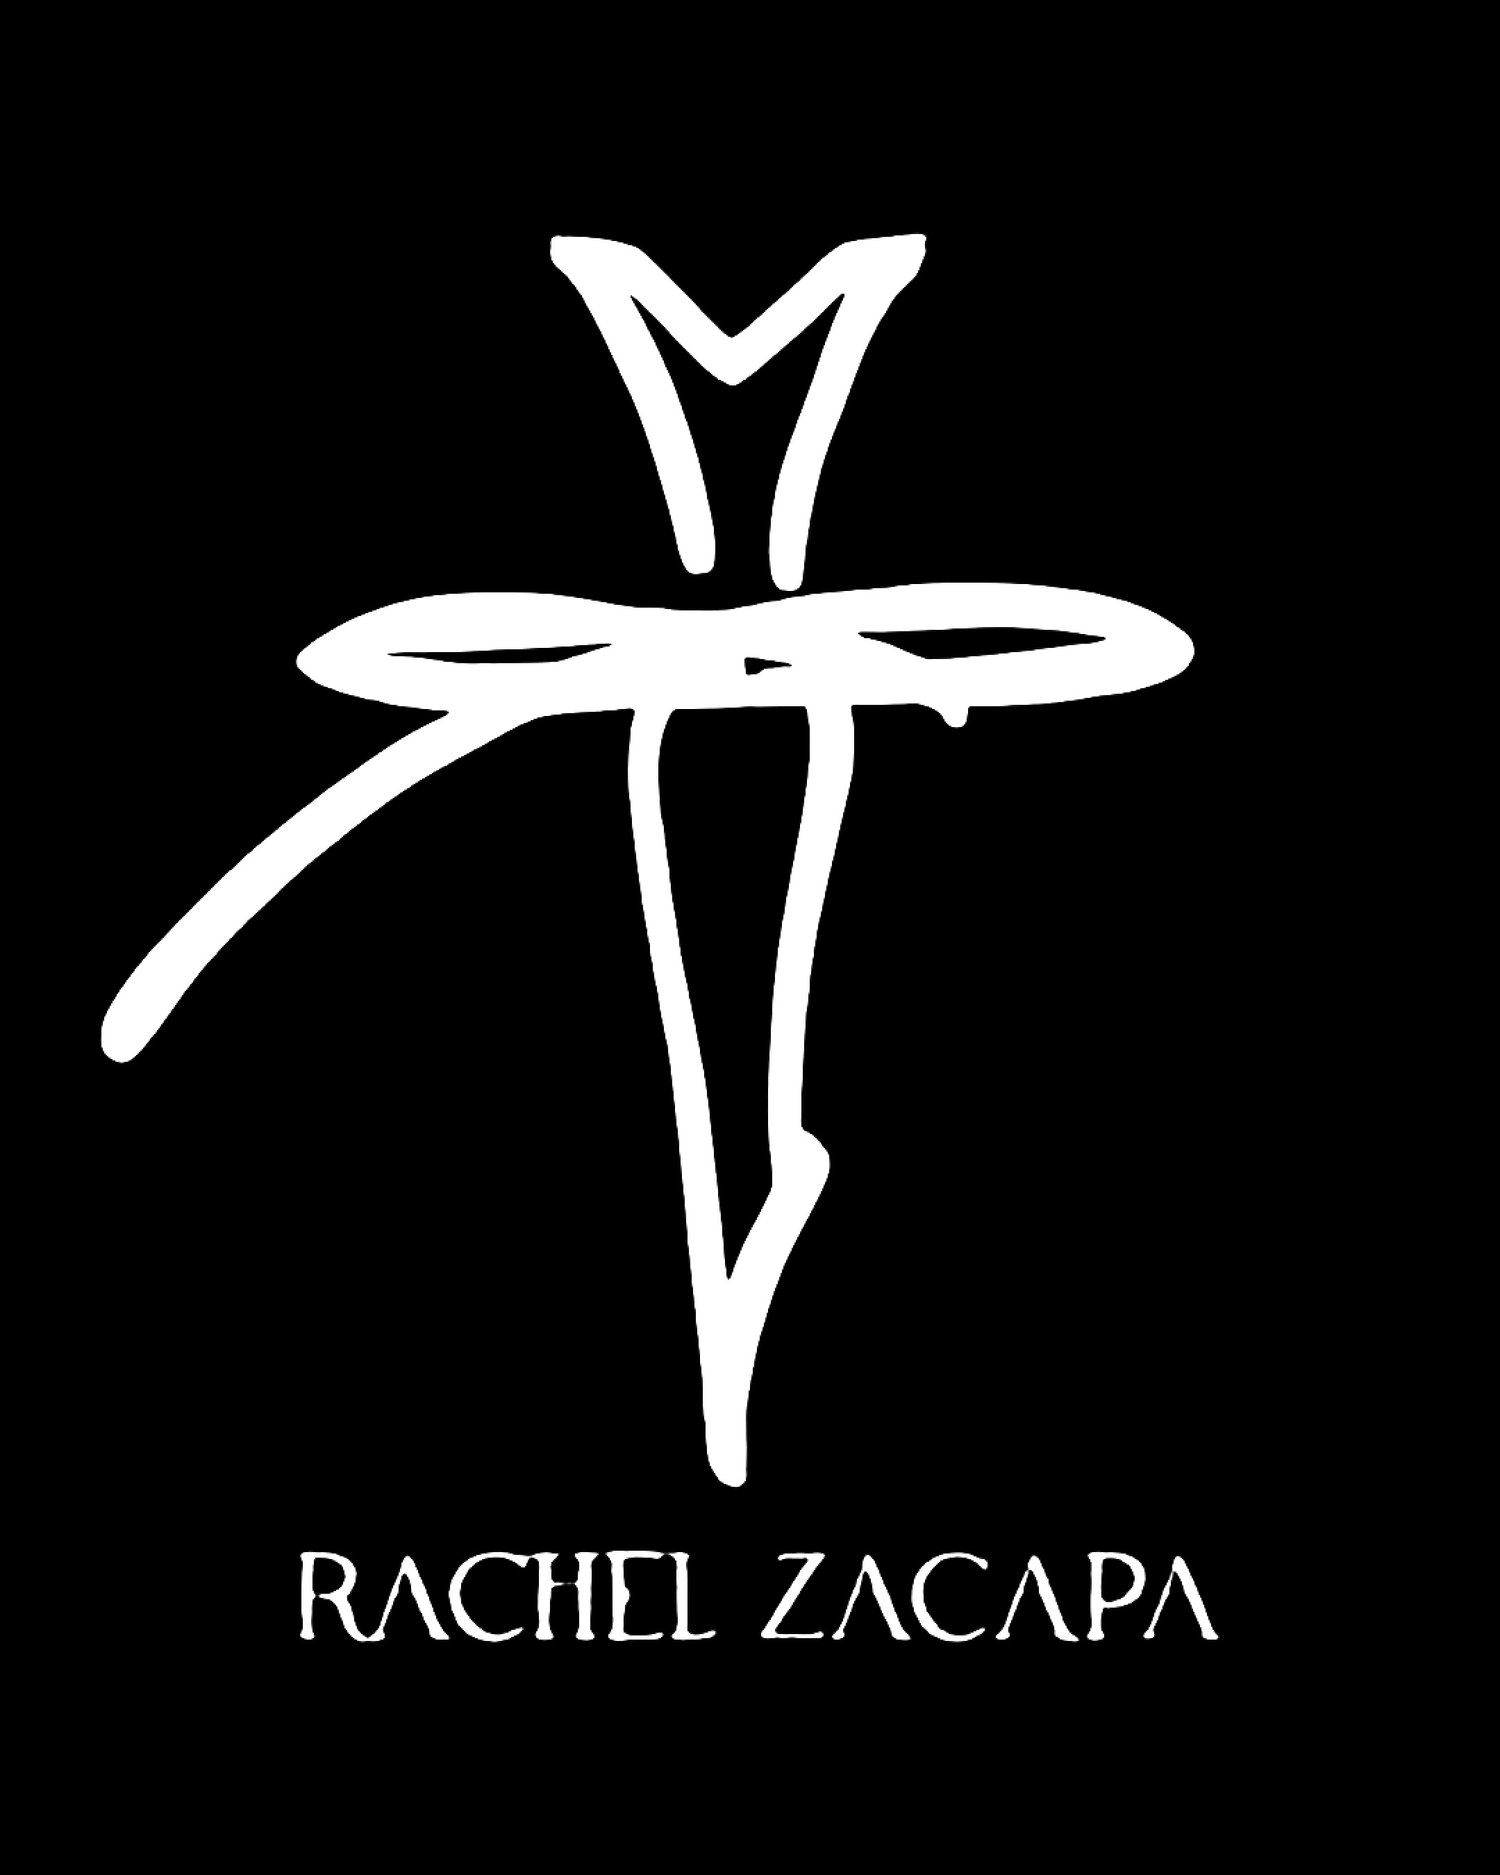 Rachel Zacapa